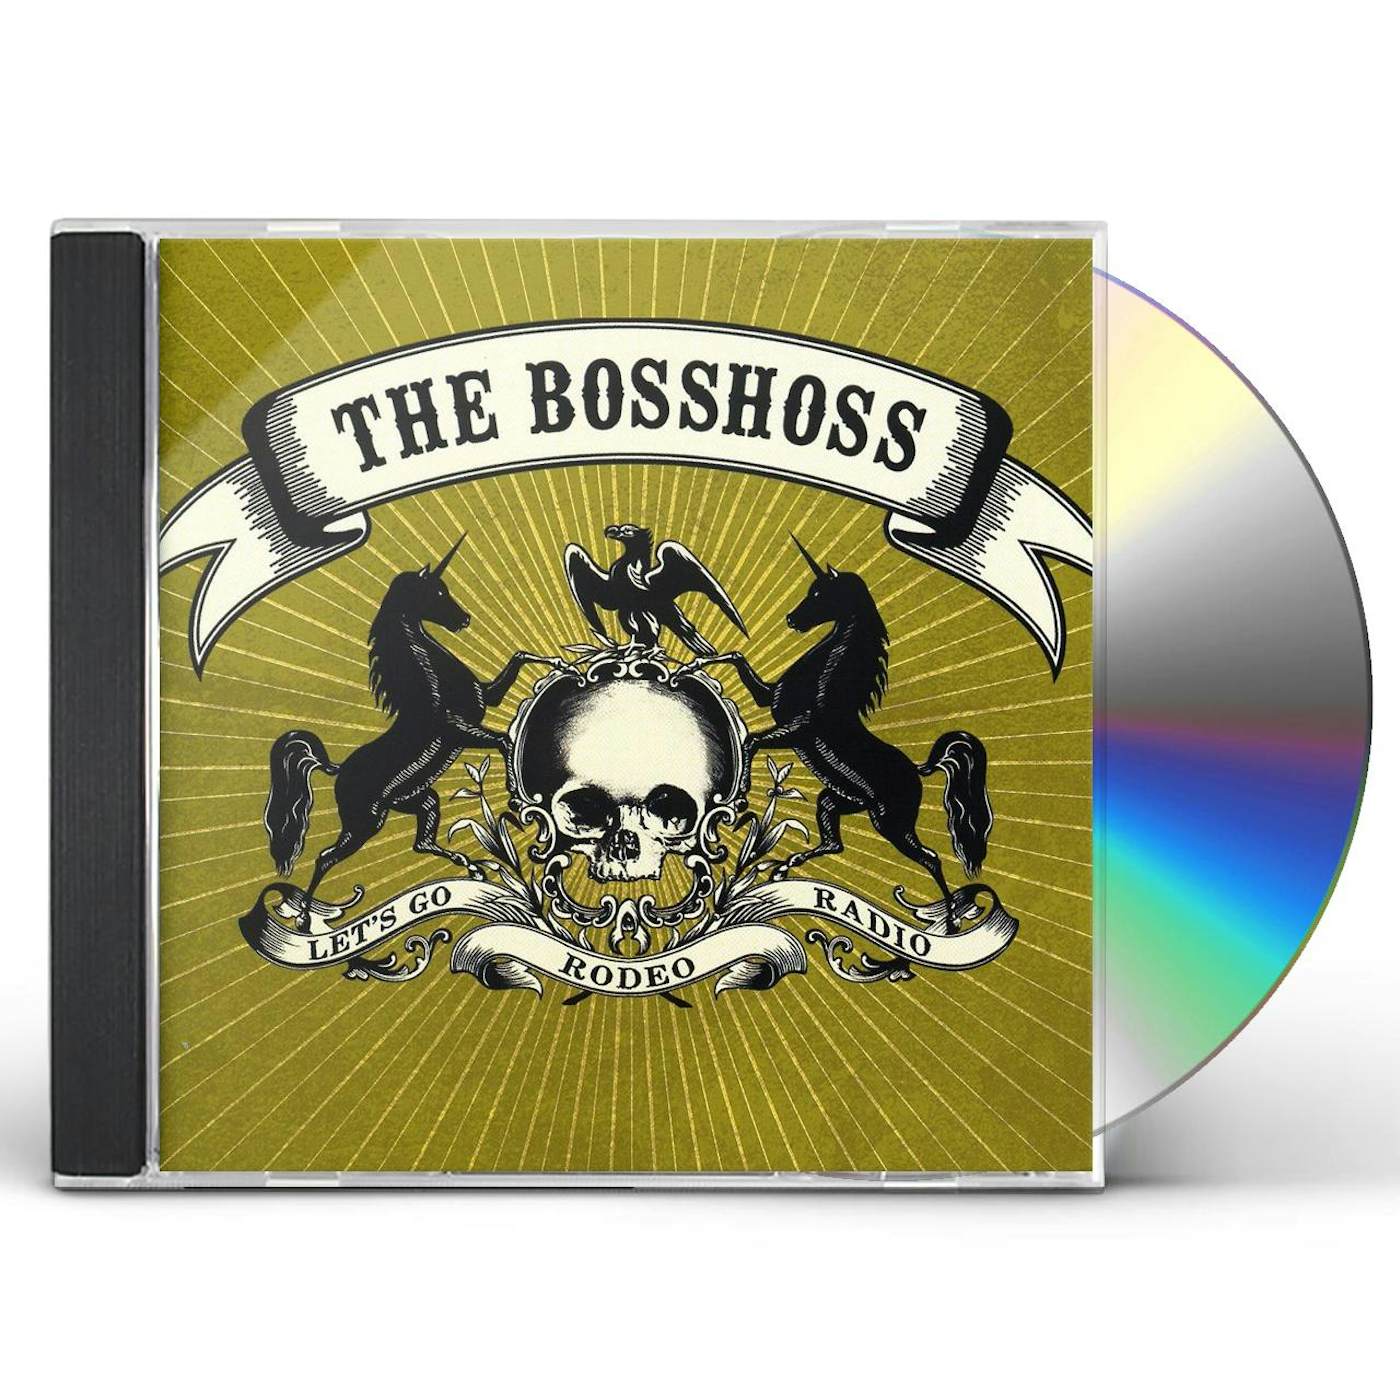 The BossHoss RODEO RADIO CD